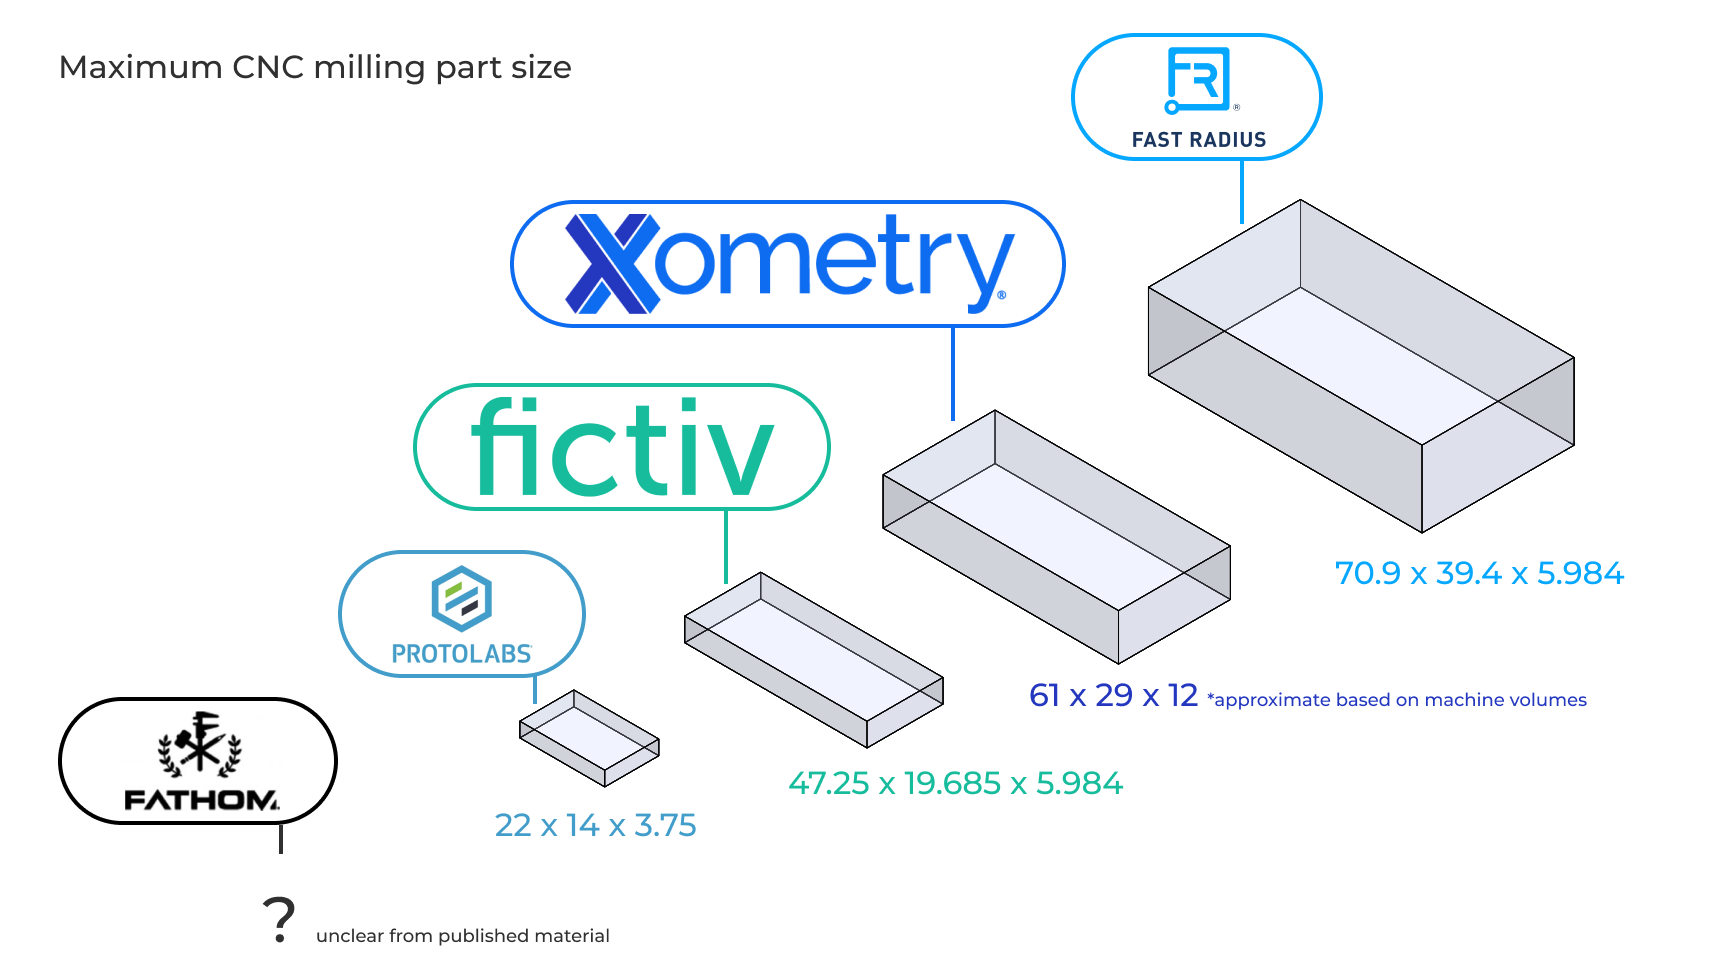 Comparison of maximum part sizes for US digital fabrication providers